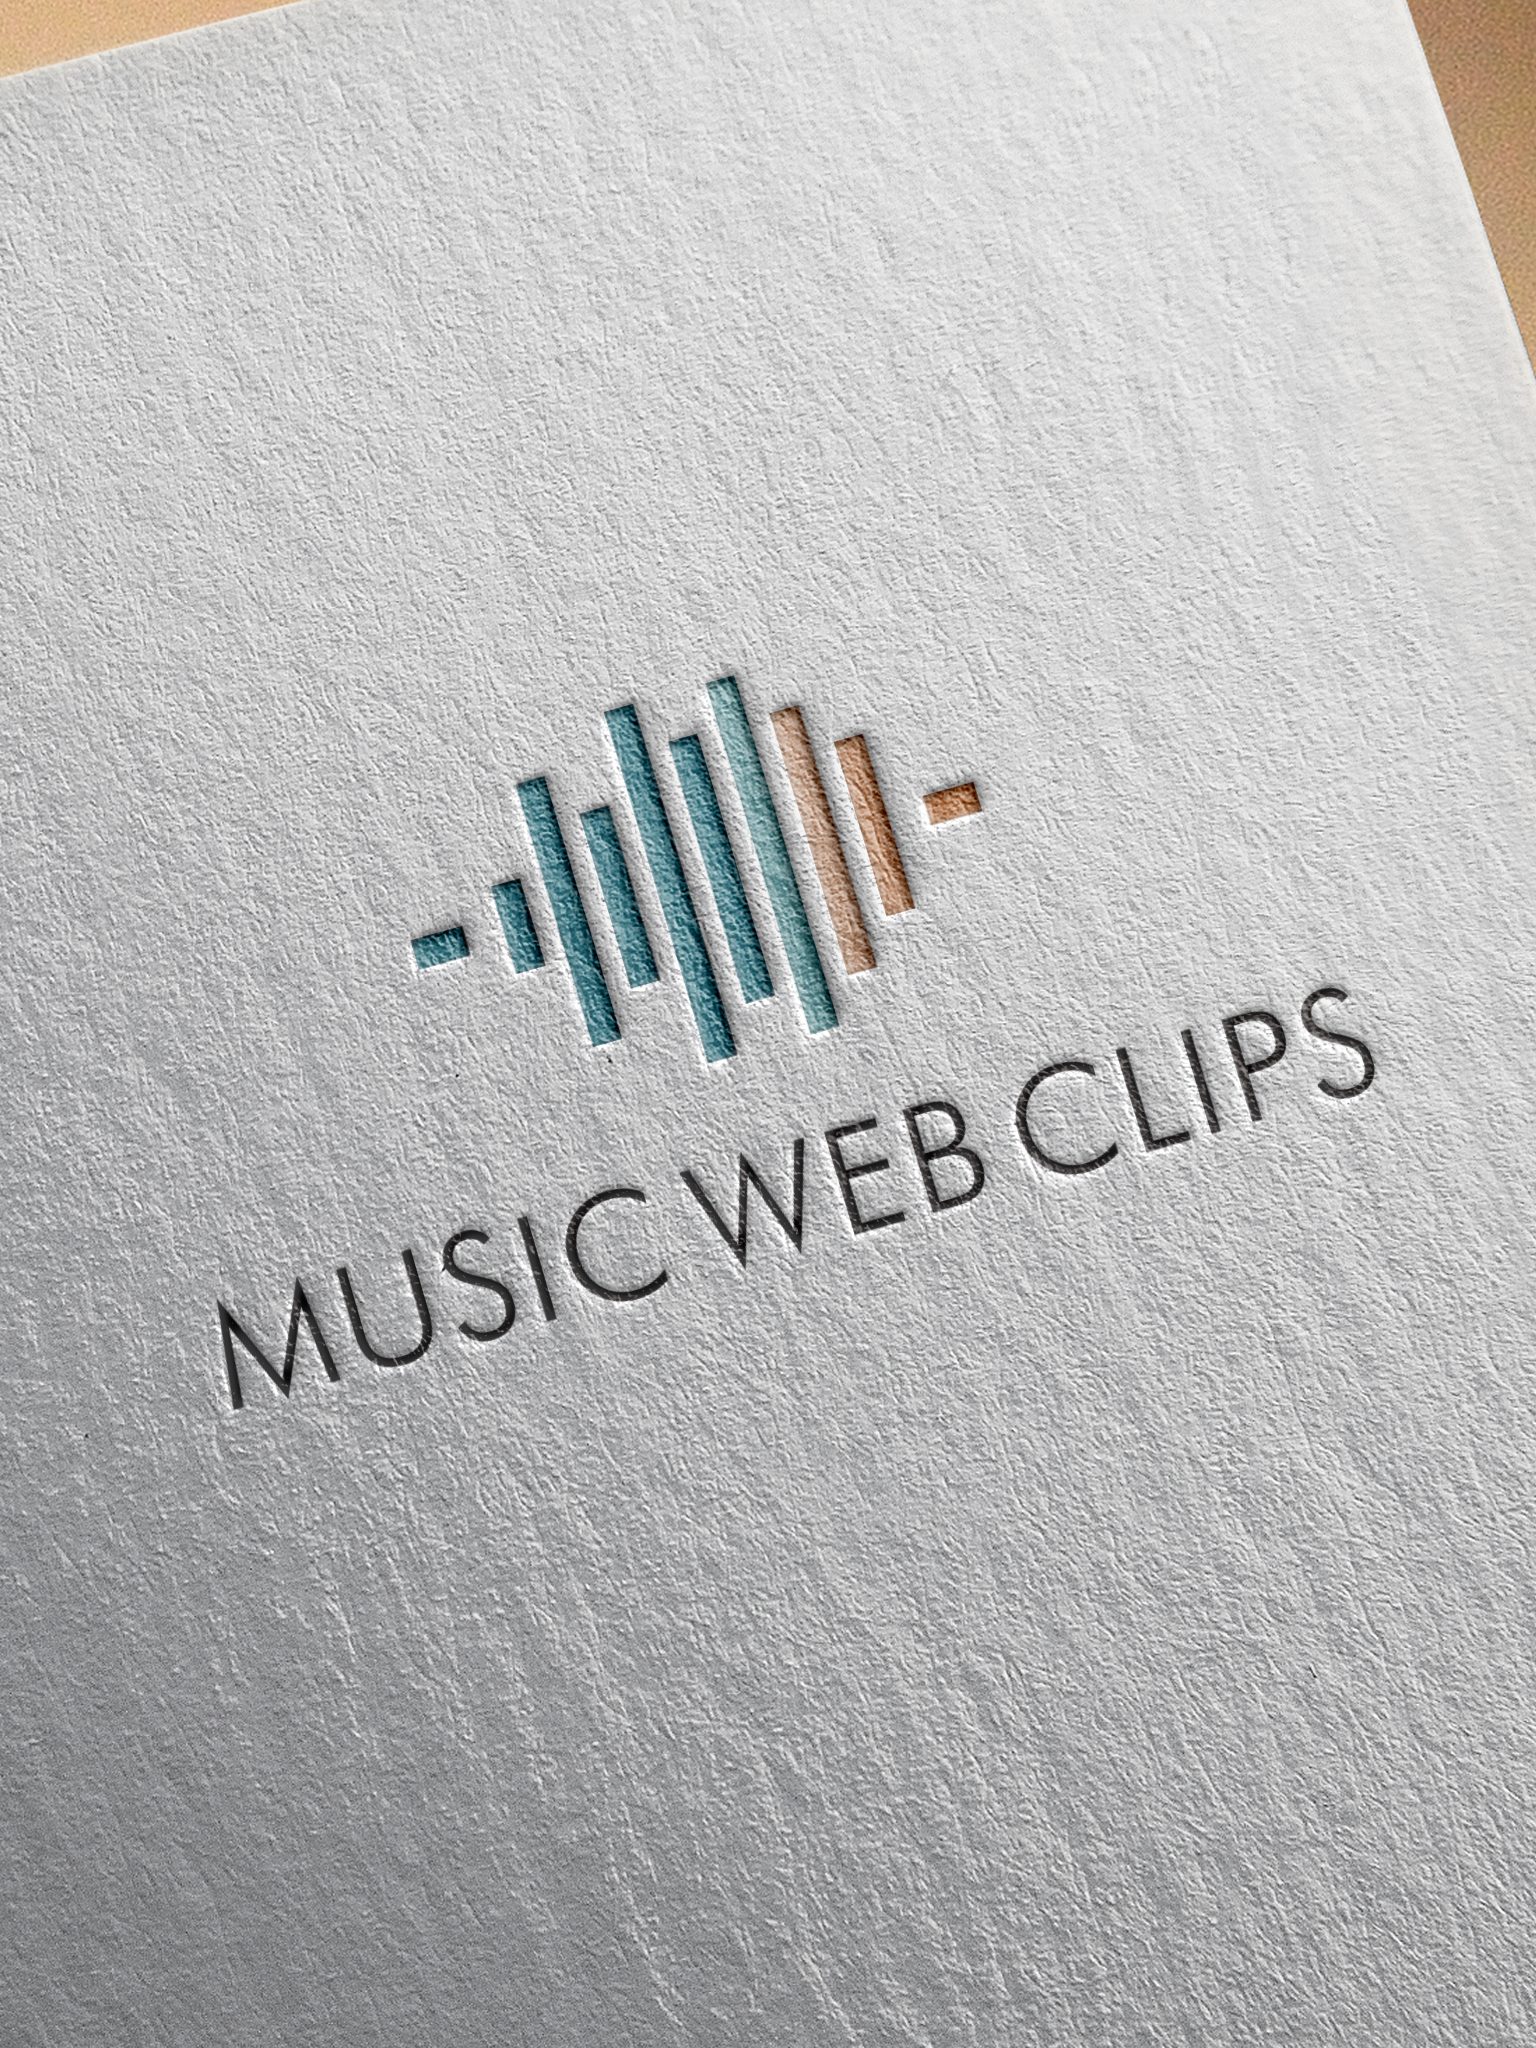 MUSIC WEB CLIPS LOGO